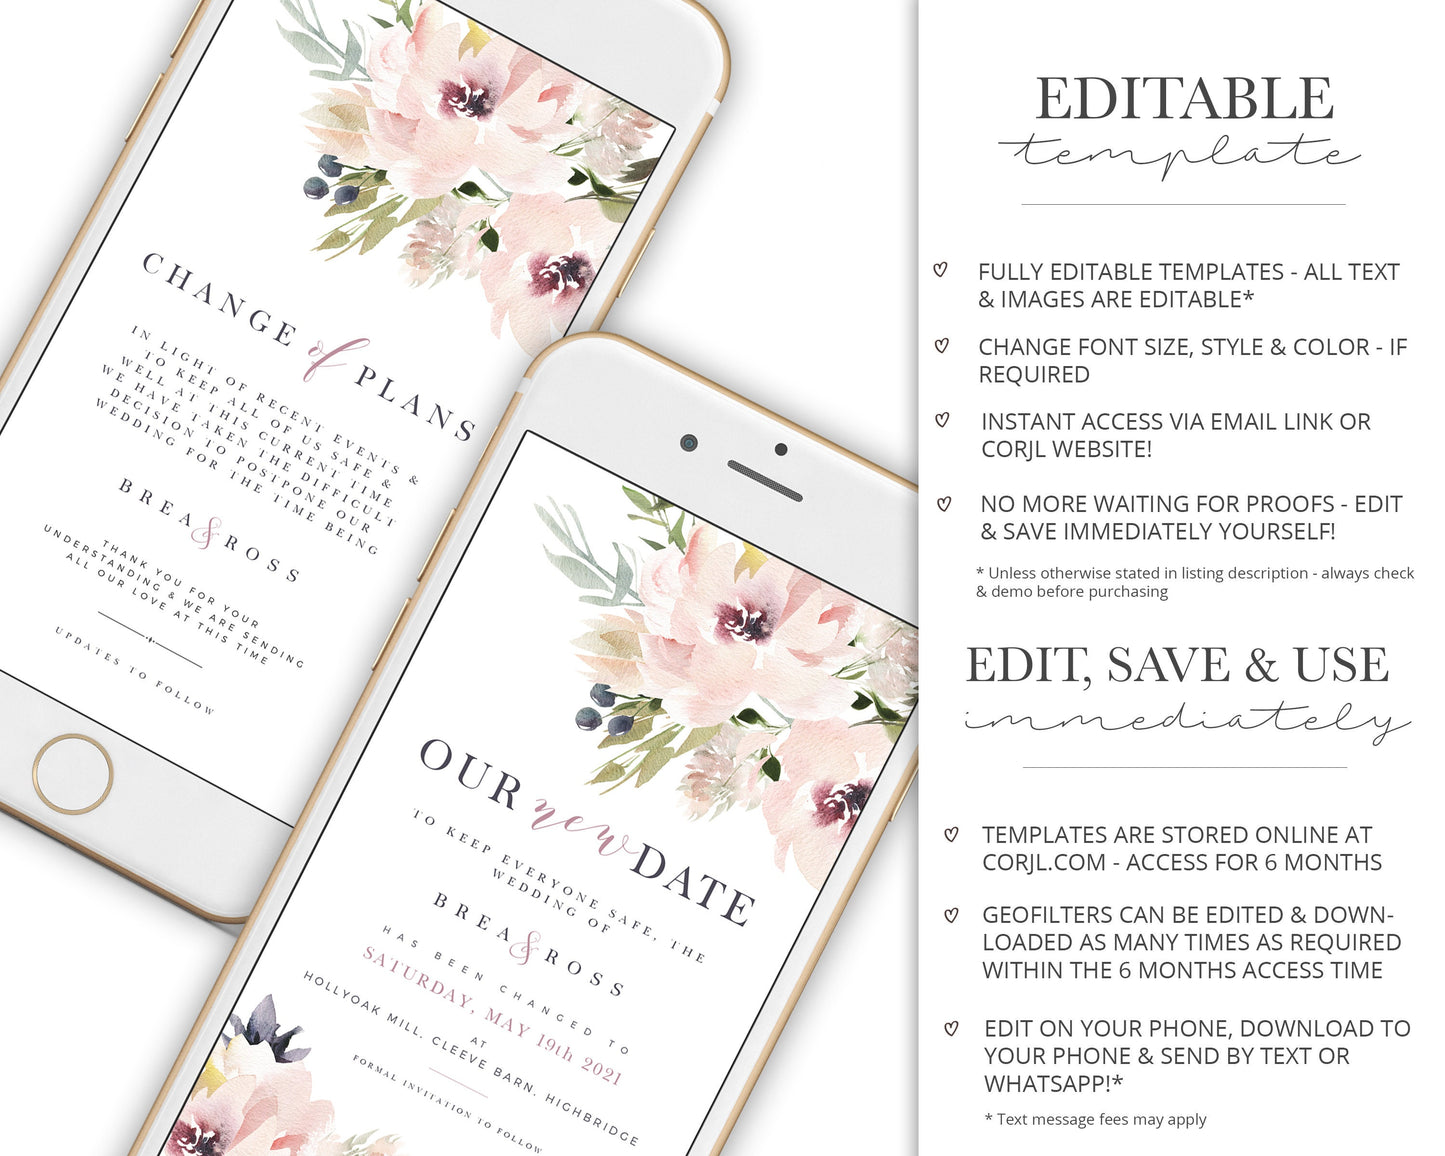 BUNDLE - INSTANT Elegant Modern Floral Phone E-messages Change of Plans Postponed Announcement New Date Editable Templates - PRD015